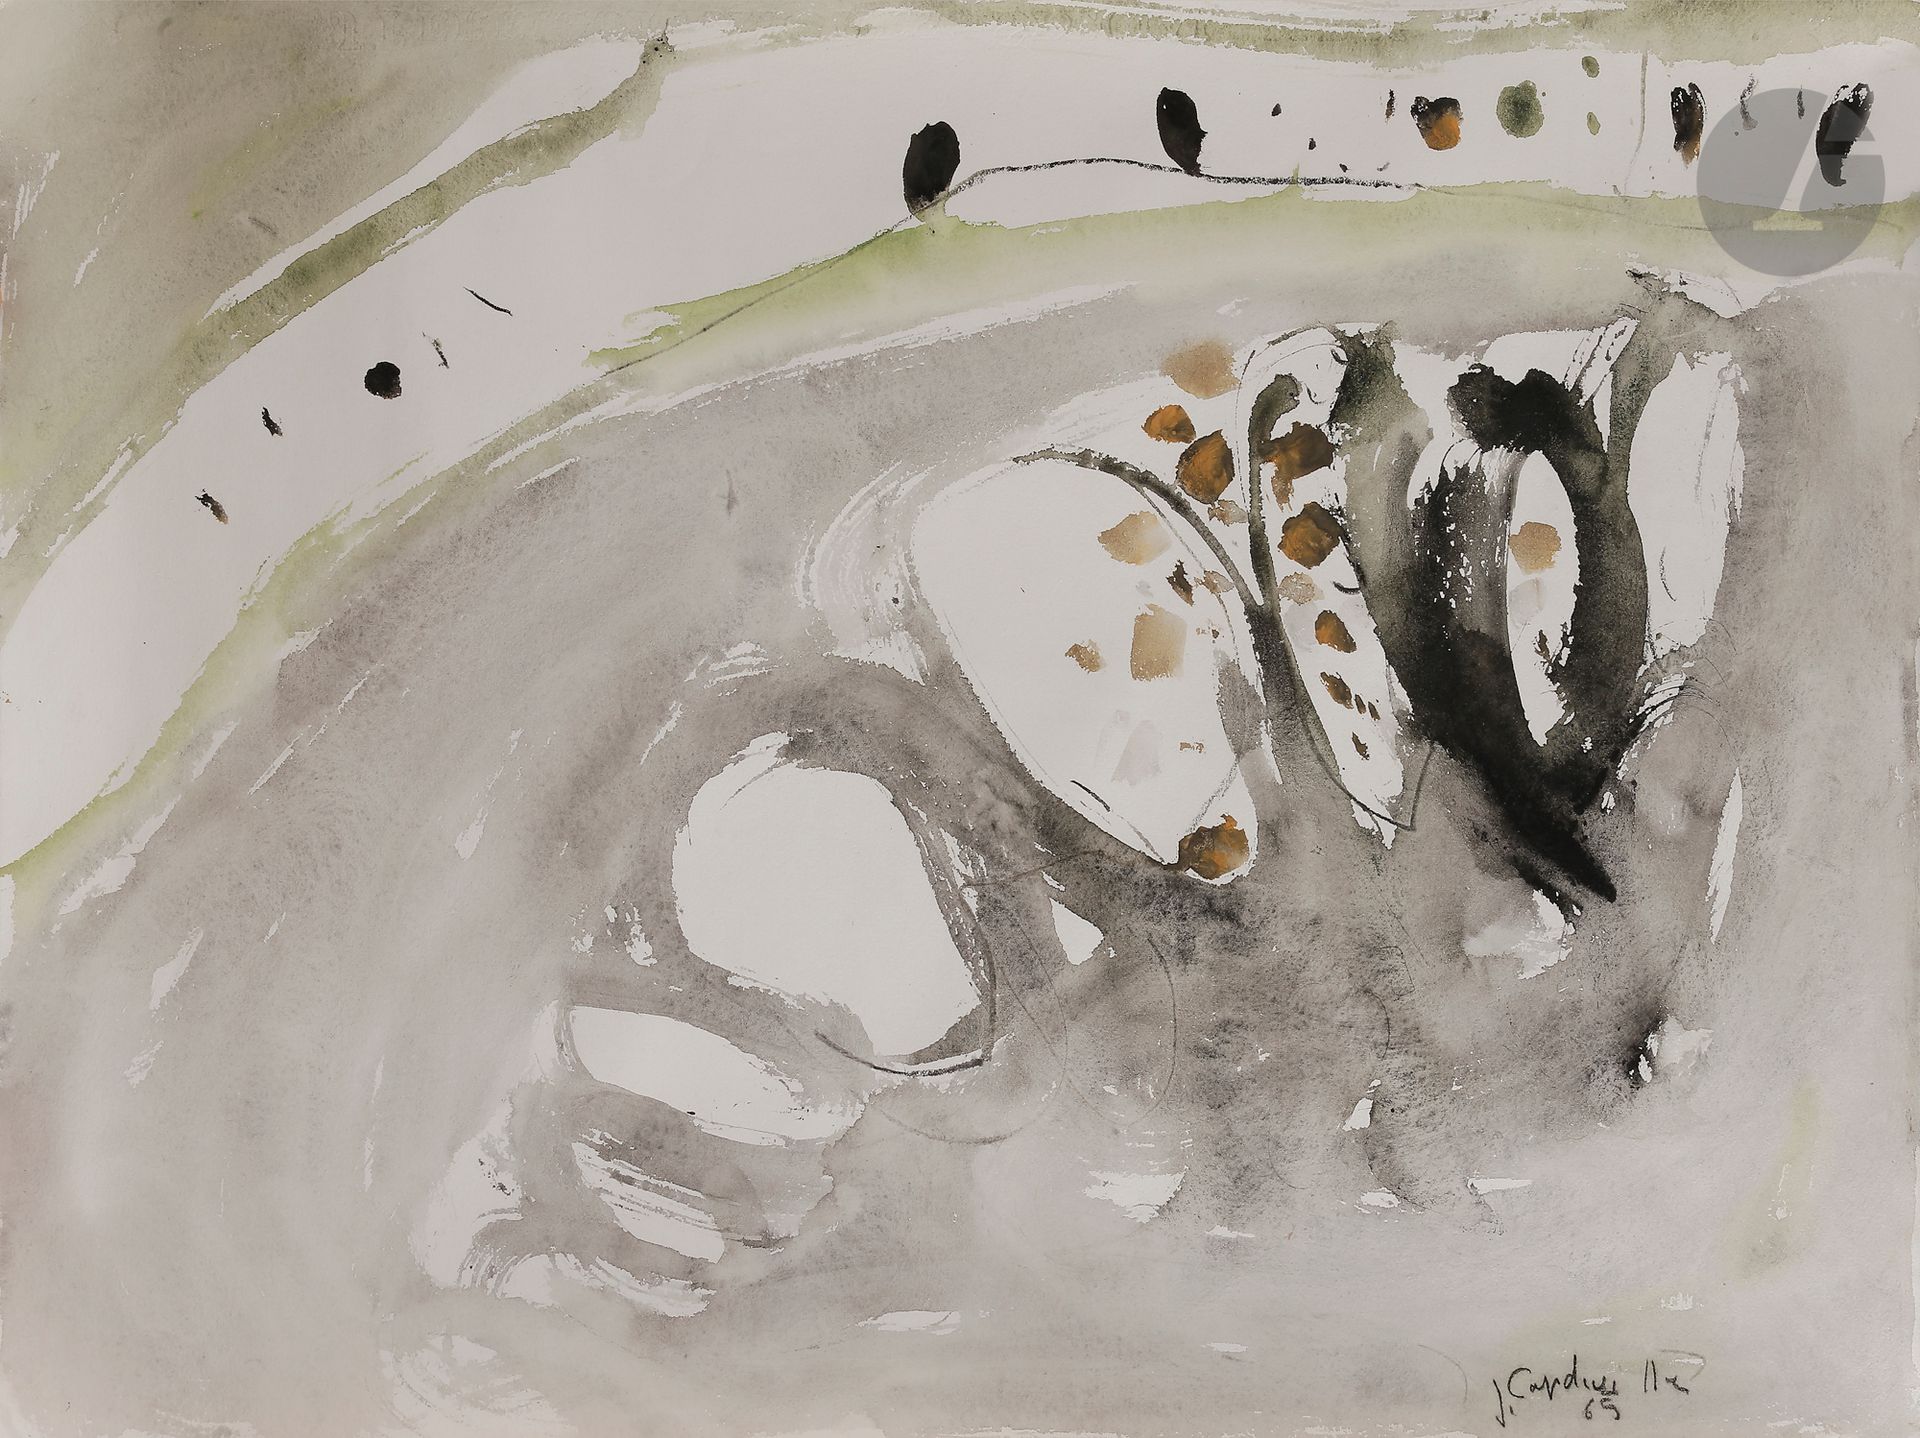 Null 
Jean CAPDEVILLE (1917-2011



)作品，1965年水彩画



。



右下方有签名和日期。



49.5 x 65&hellip;